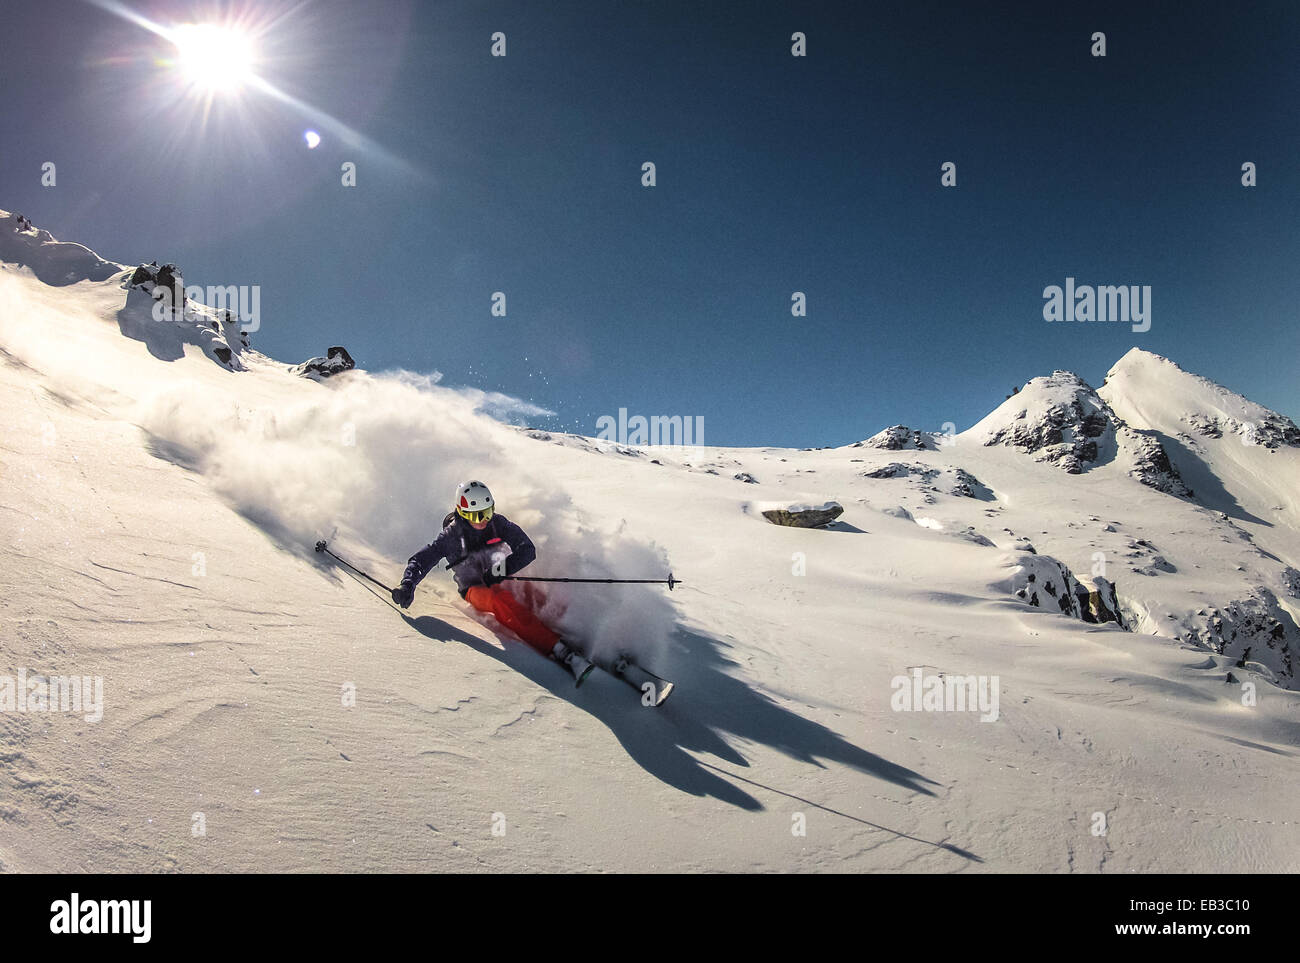 Austria, Skier doing turn in fresh powder snow Stock Photo